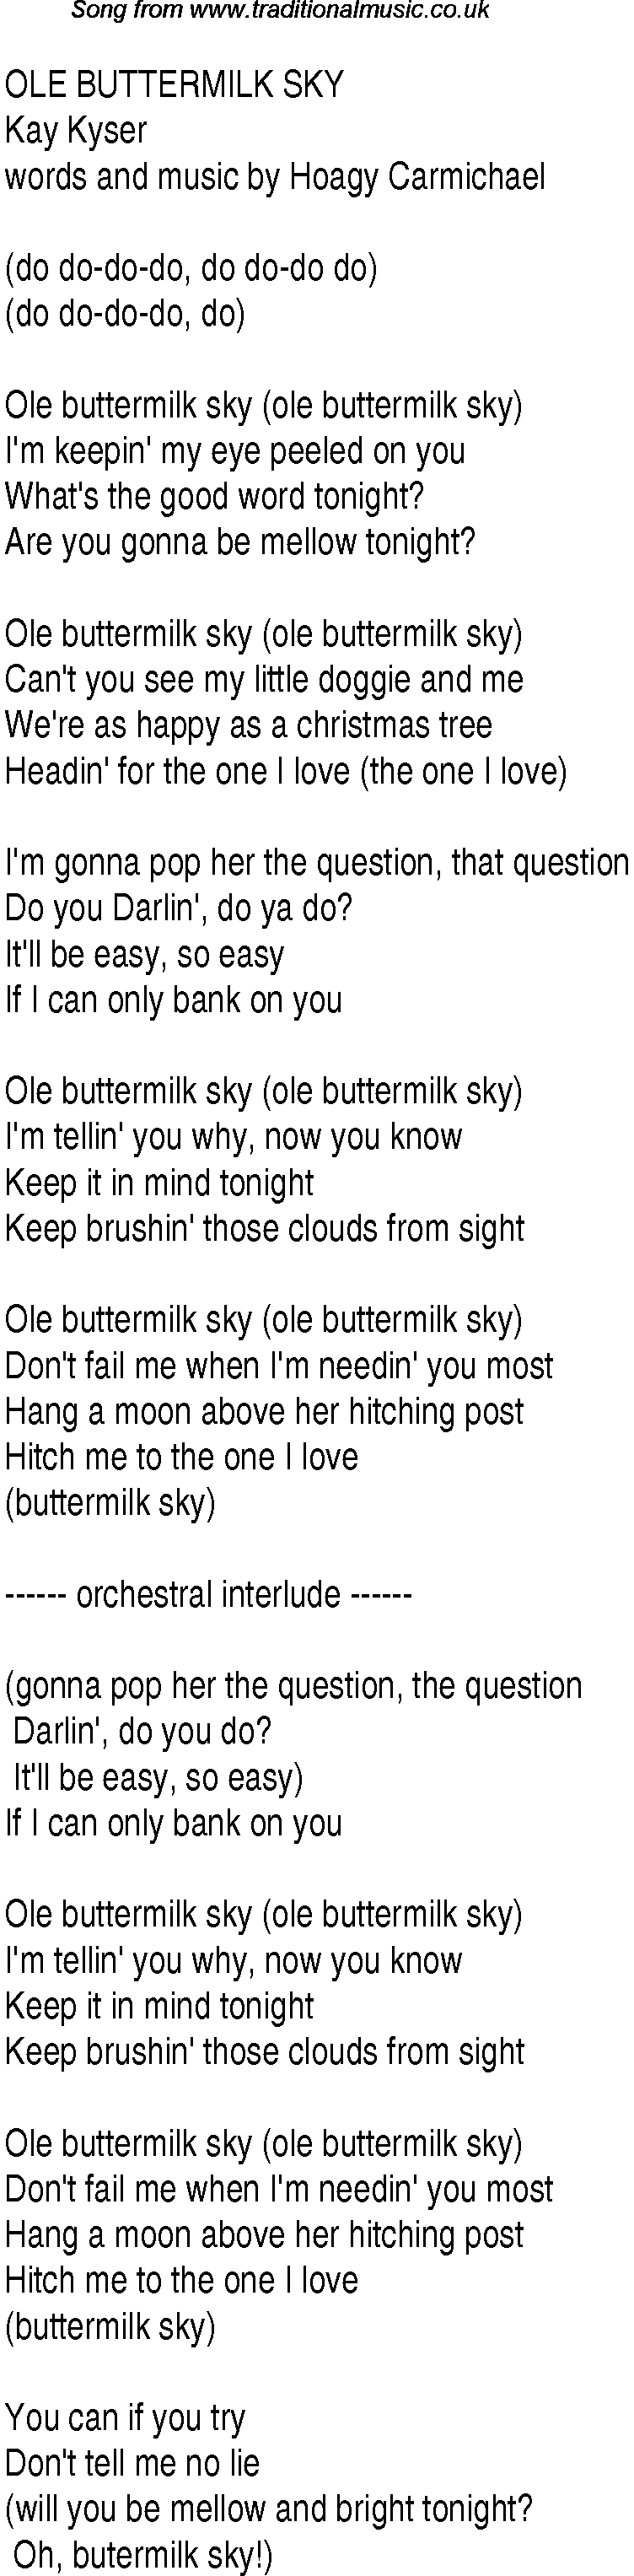 Music charts top songs 1946 - lyrics for Ole Buttermilk Sky